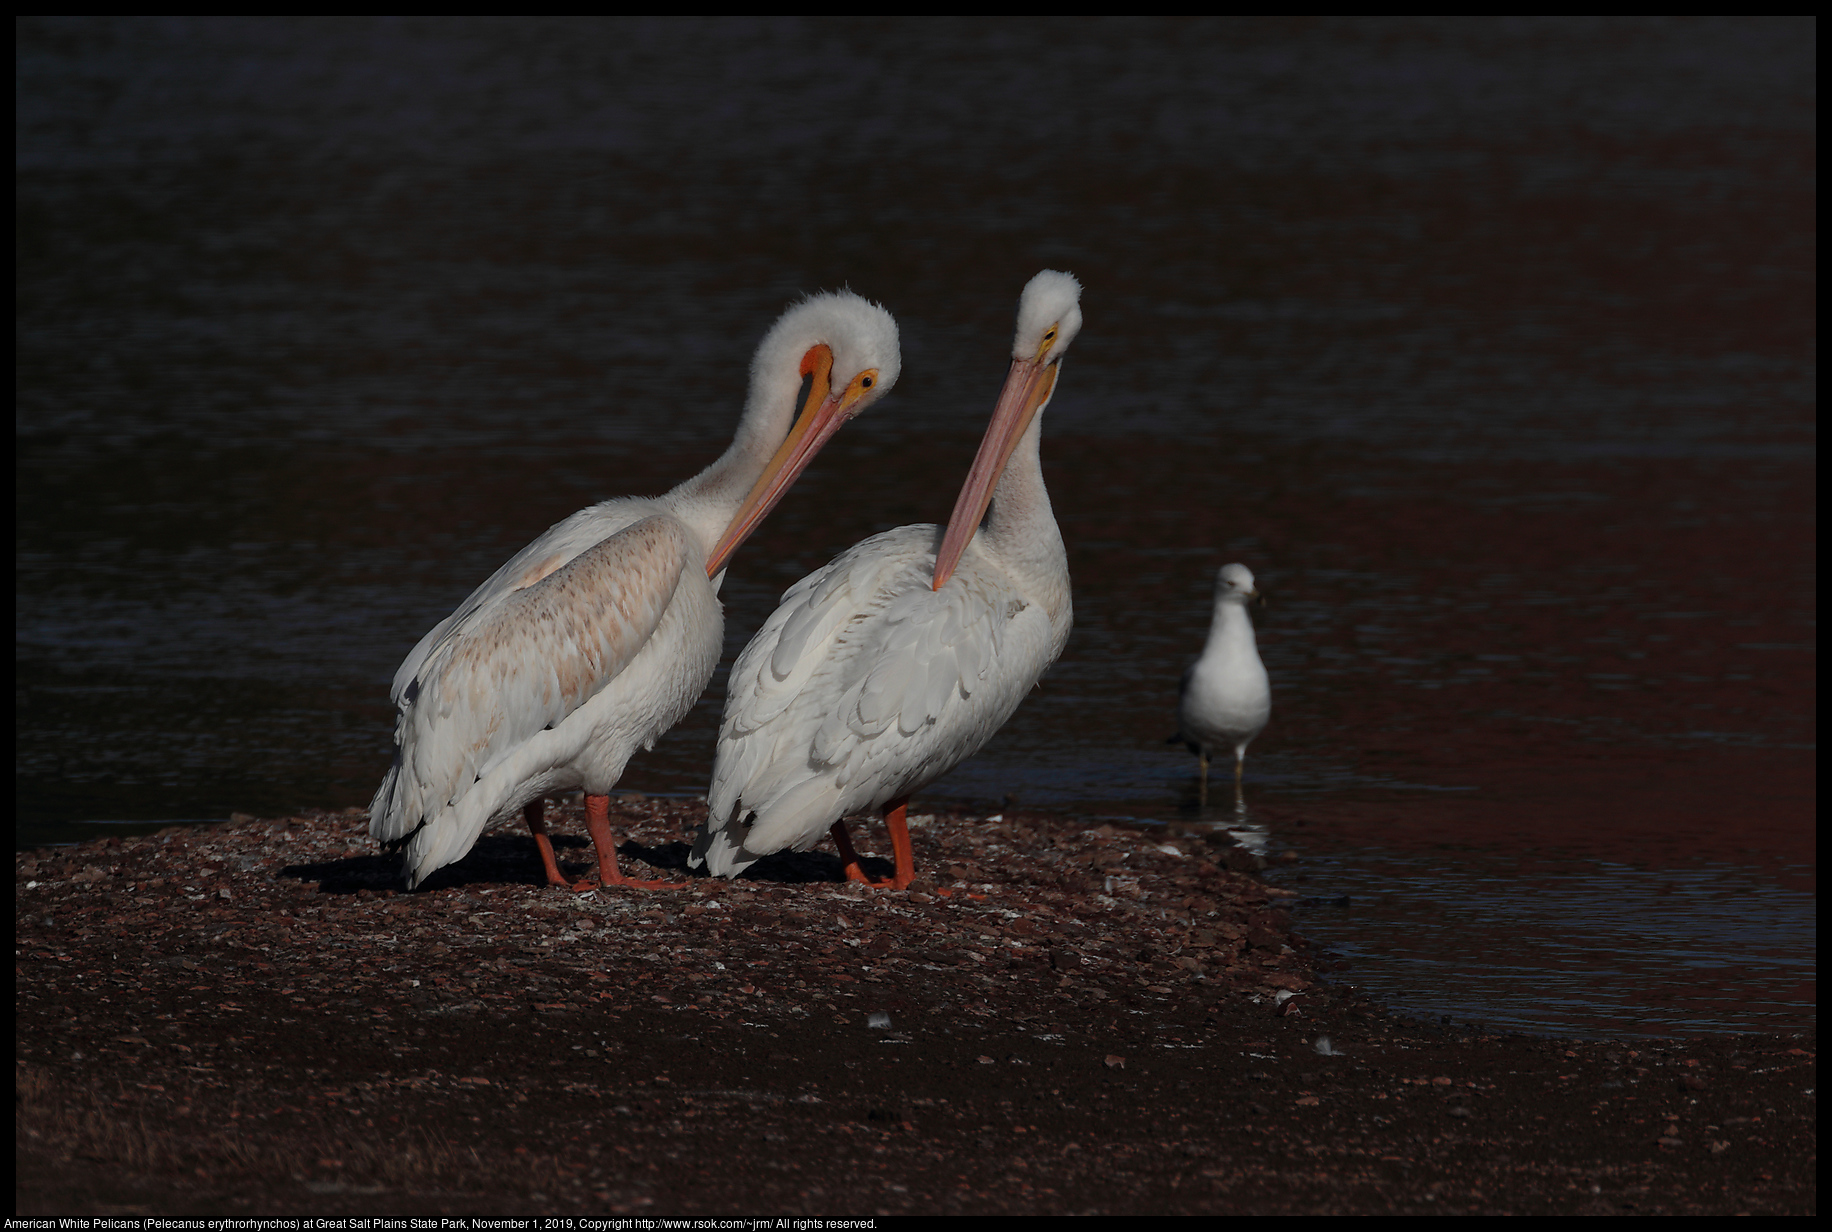 American White Pelicans (Pelecanus erythrorhynchos) at Great Salt Plains State Park, November 1, 2019